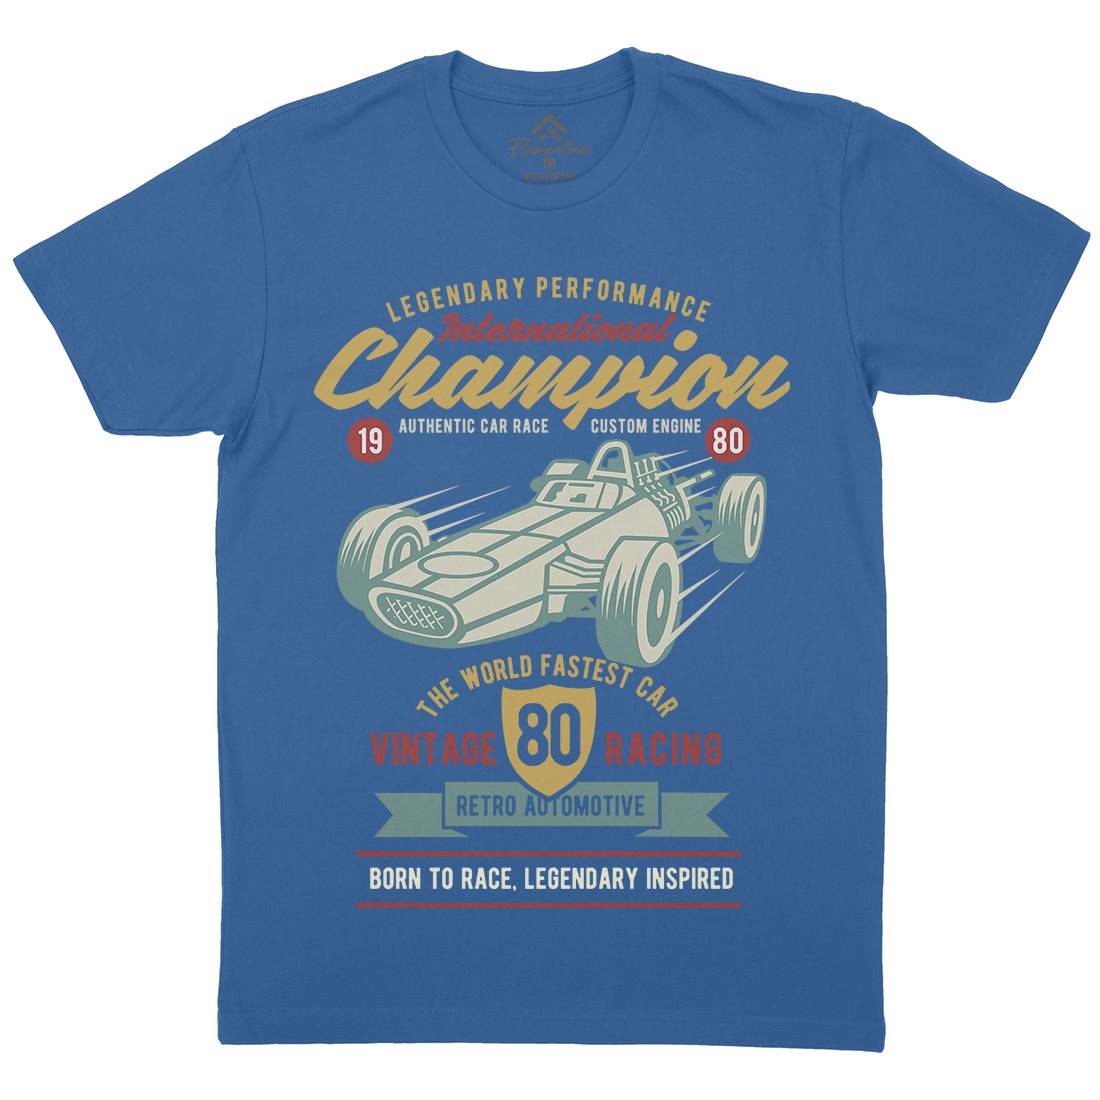 International Champion Car Race Mens Organic Crew Neck T-Shirt Cars B412